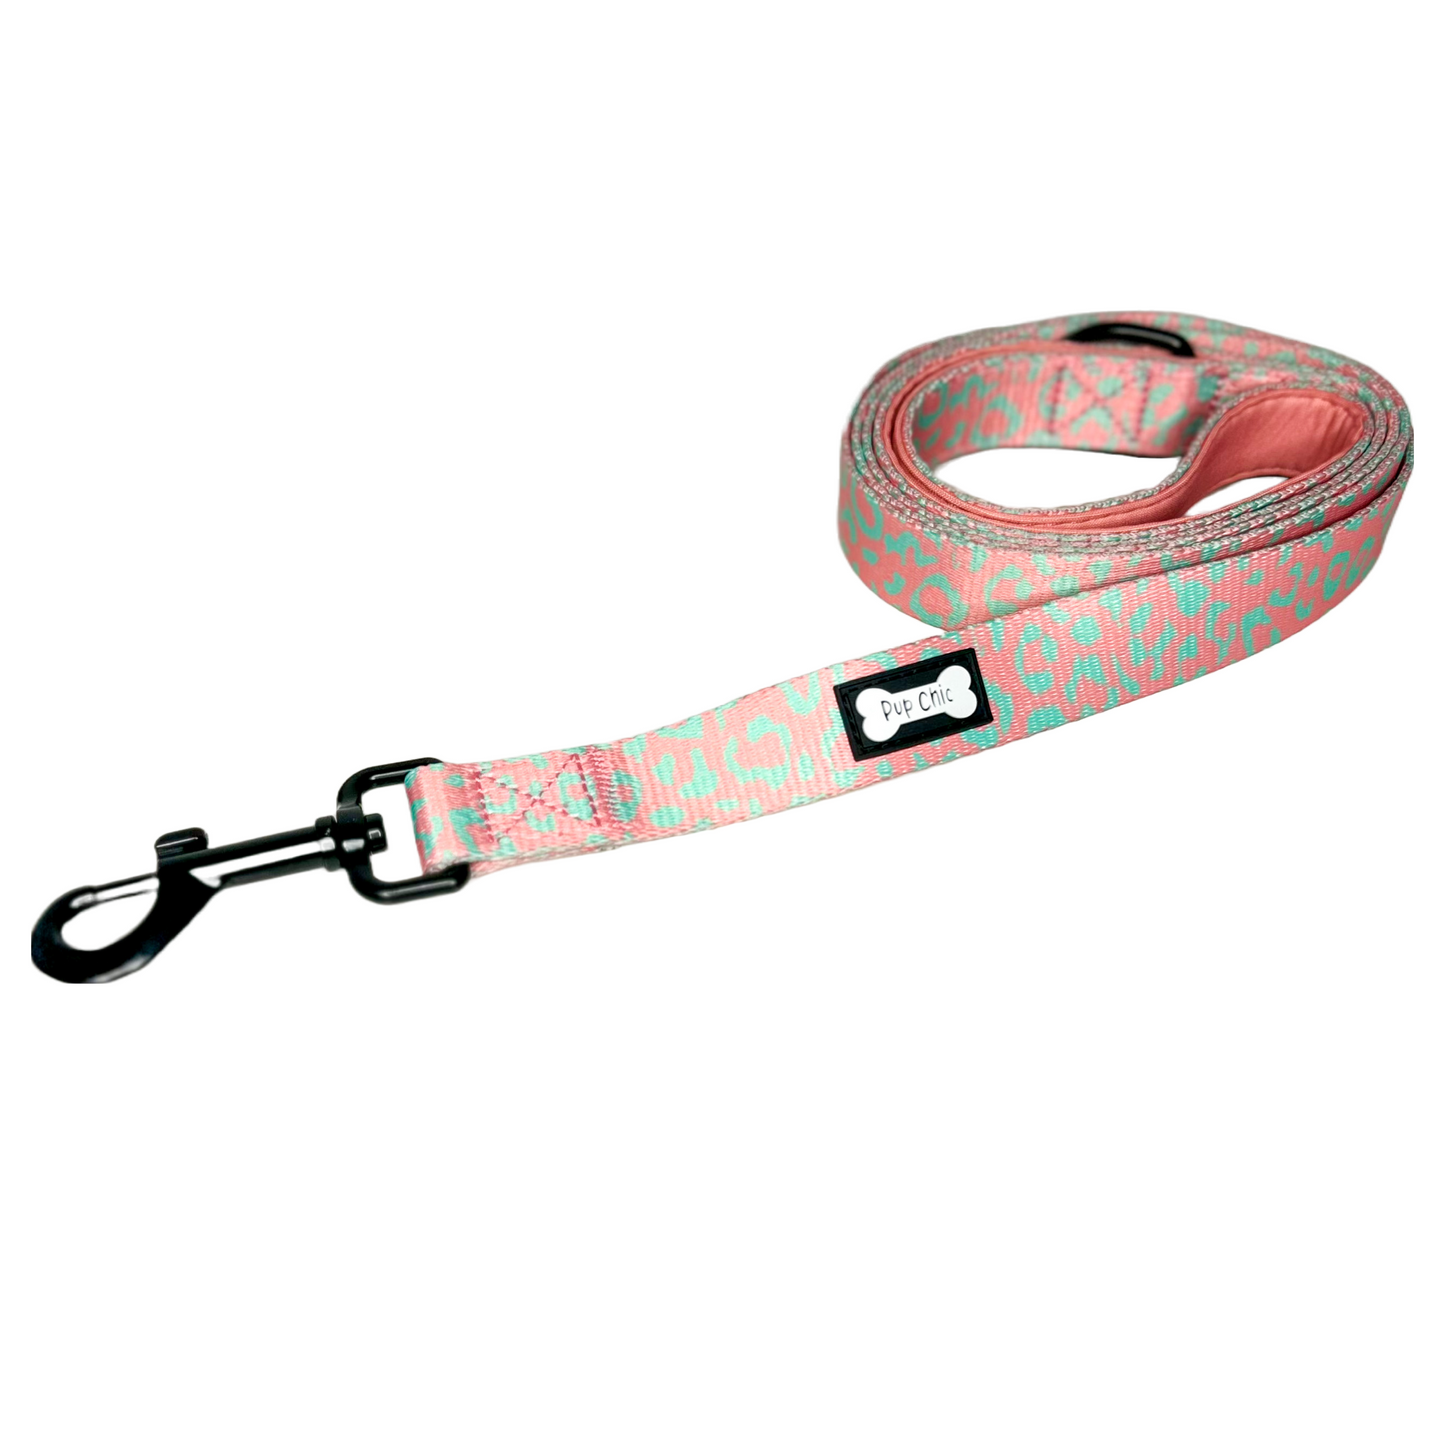 Wild Chic Lead - animal print dog leash